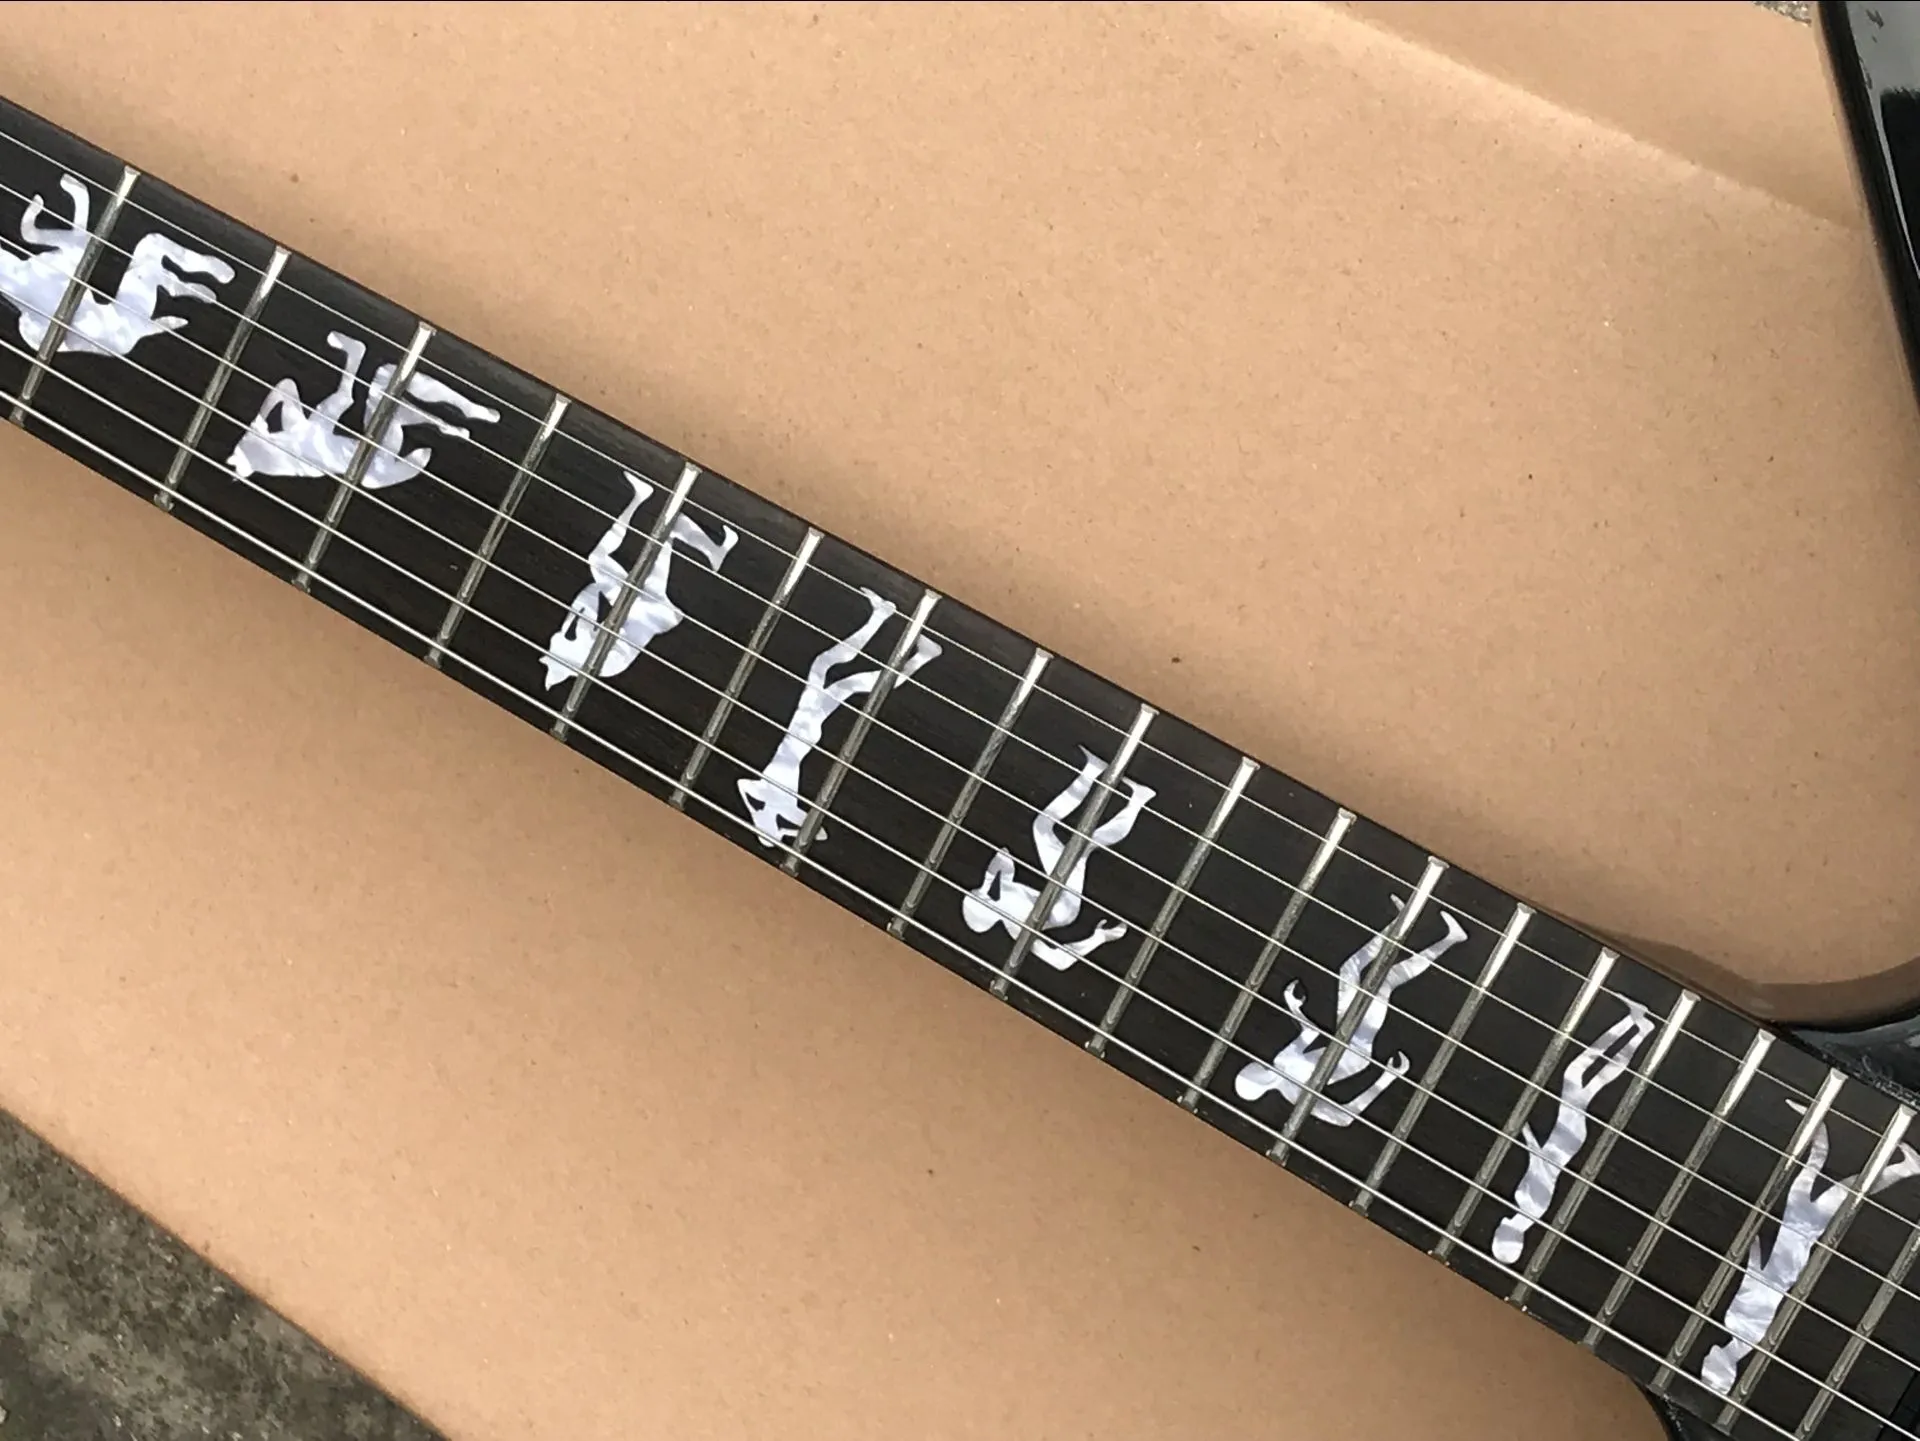 James Metallic Hetfield Gloss Black Electric Guitar ativo China EMG Pickups 9V Battery Box Black Hardware